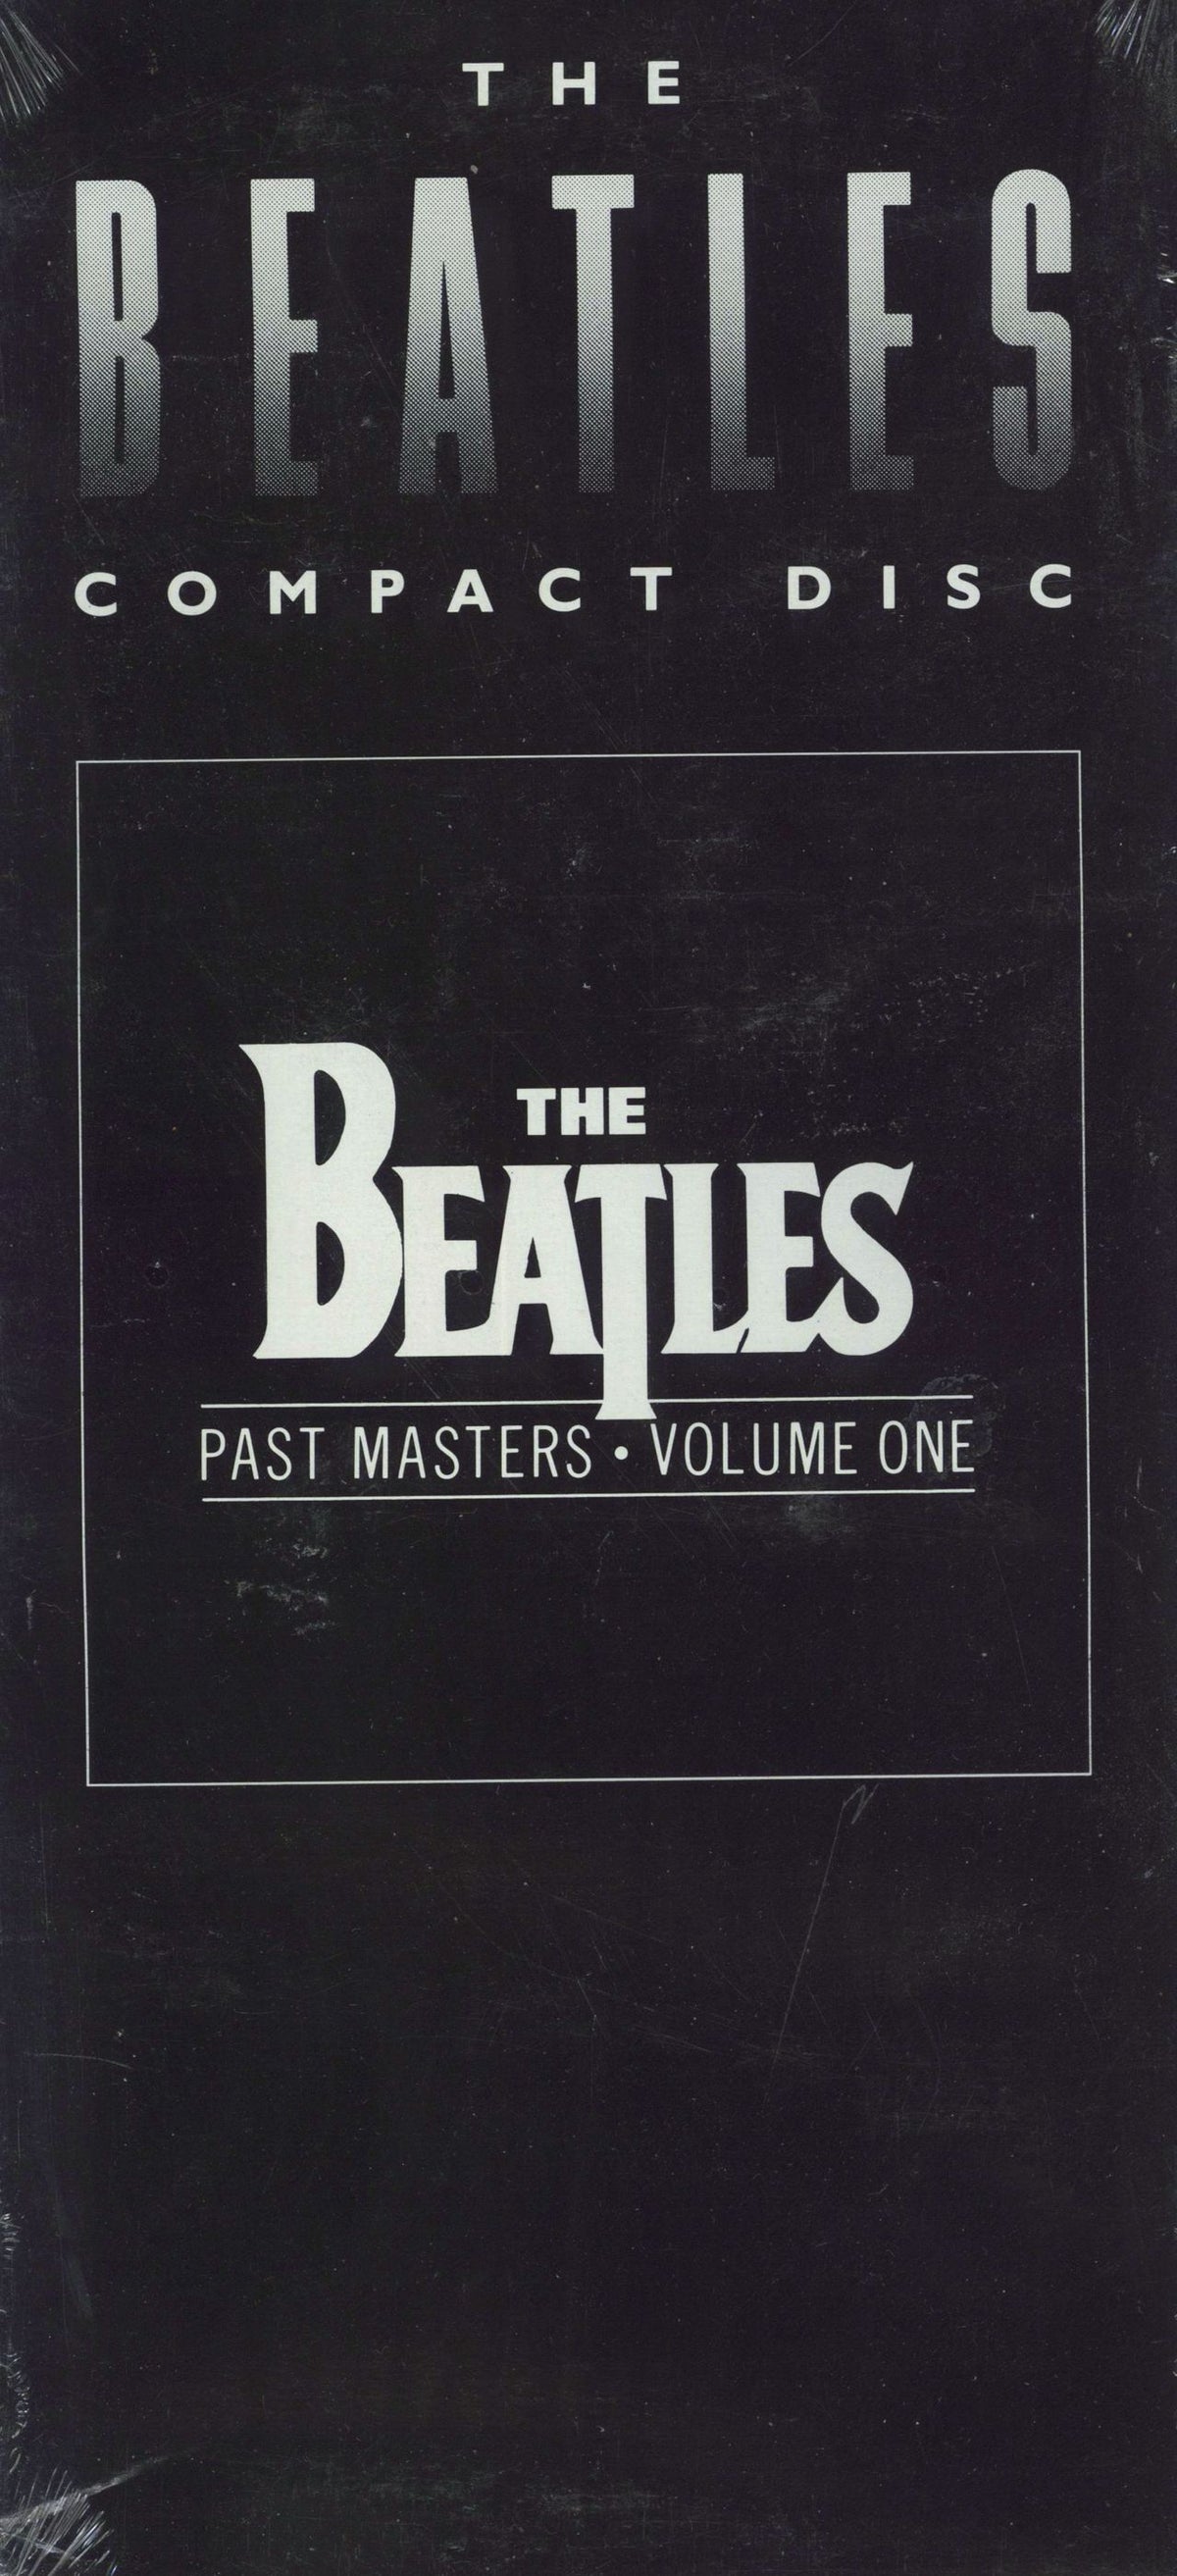 The Beatles Past Masters Volume One - Sealed longbox US CD album 